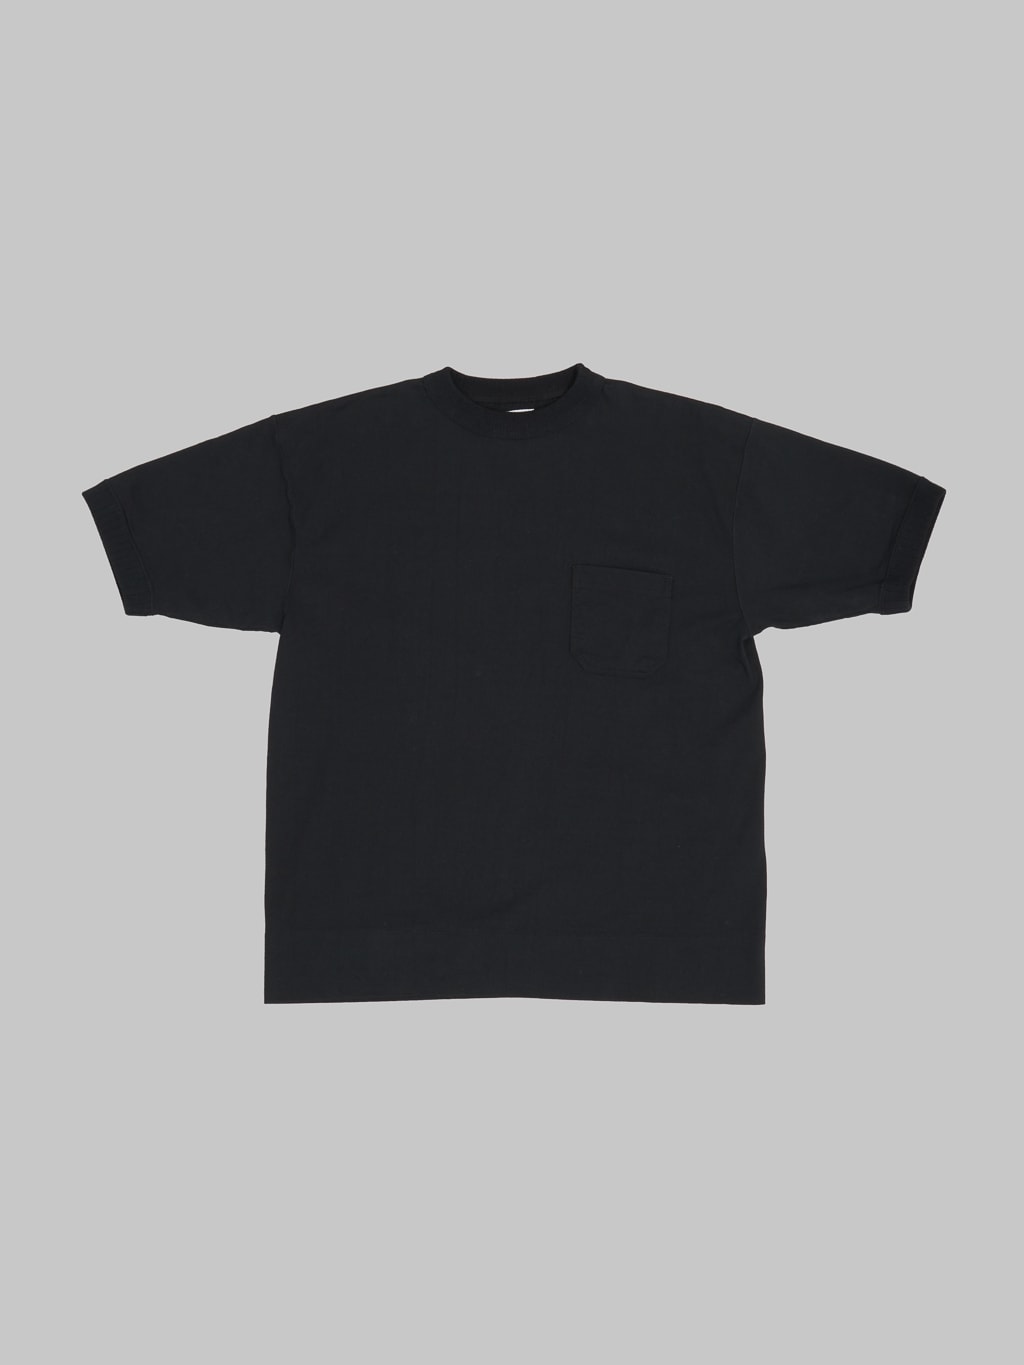 ONI Denim T01 8oz Loopwheeled Heavyweight T-Shirt Black